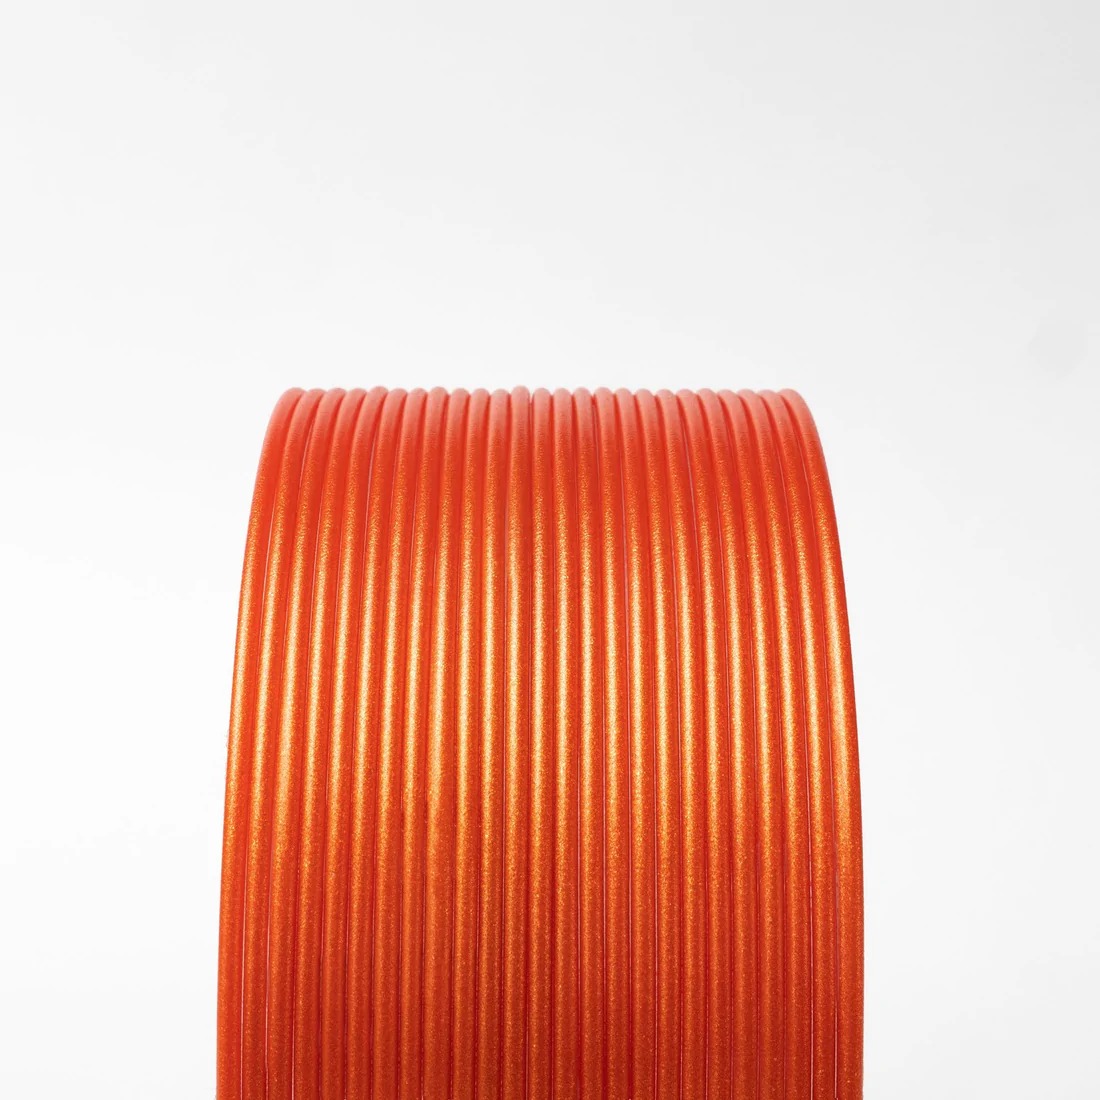 Tangerine Orange Metallic Gold HTPLA  Proto-pasta 1.75mm 500gms 3D printing filament